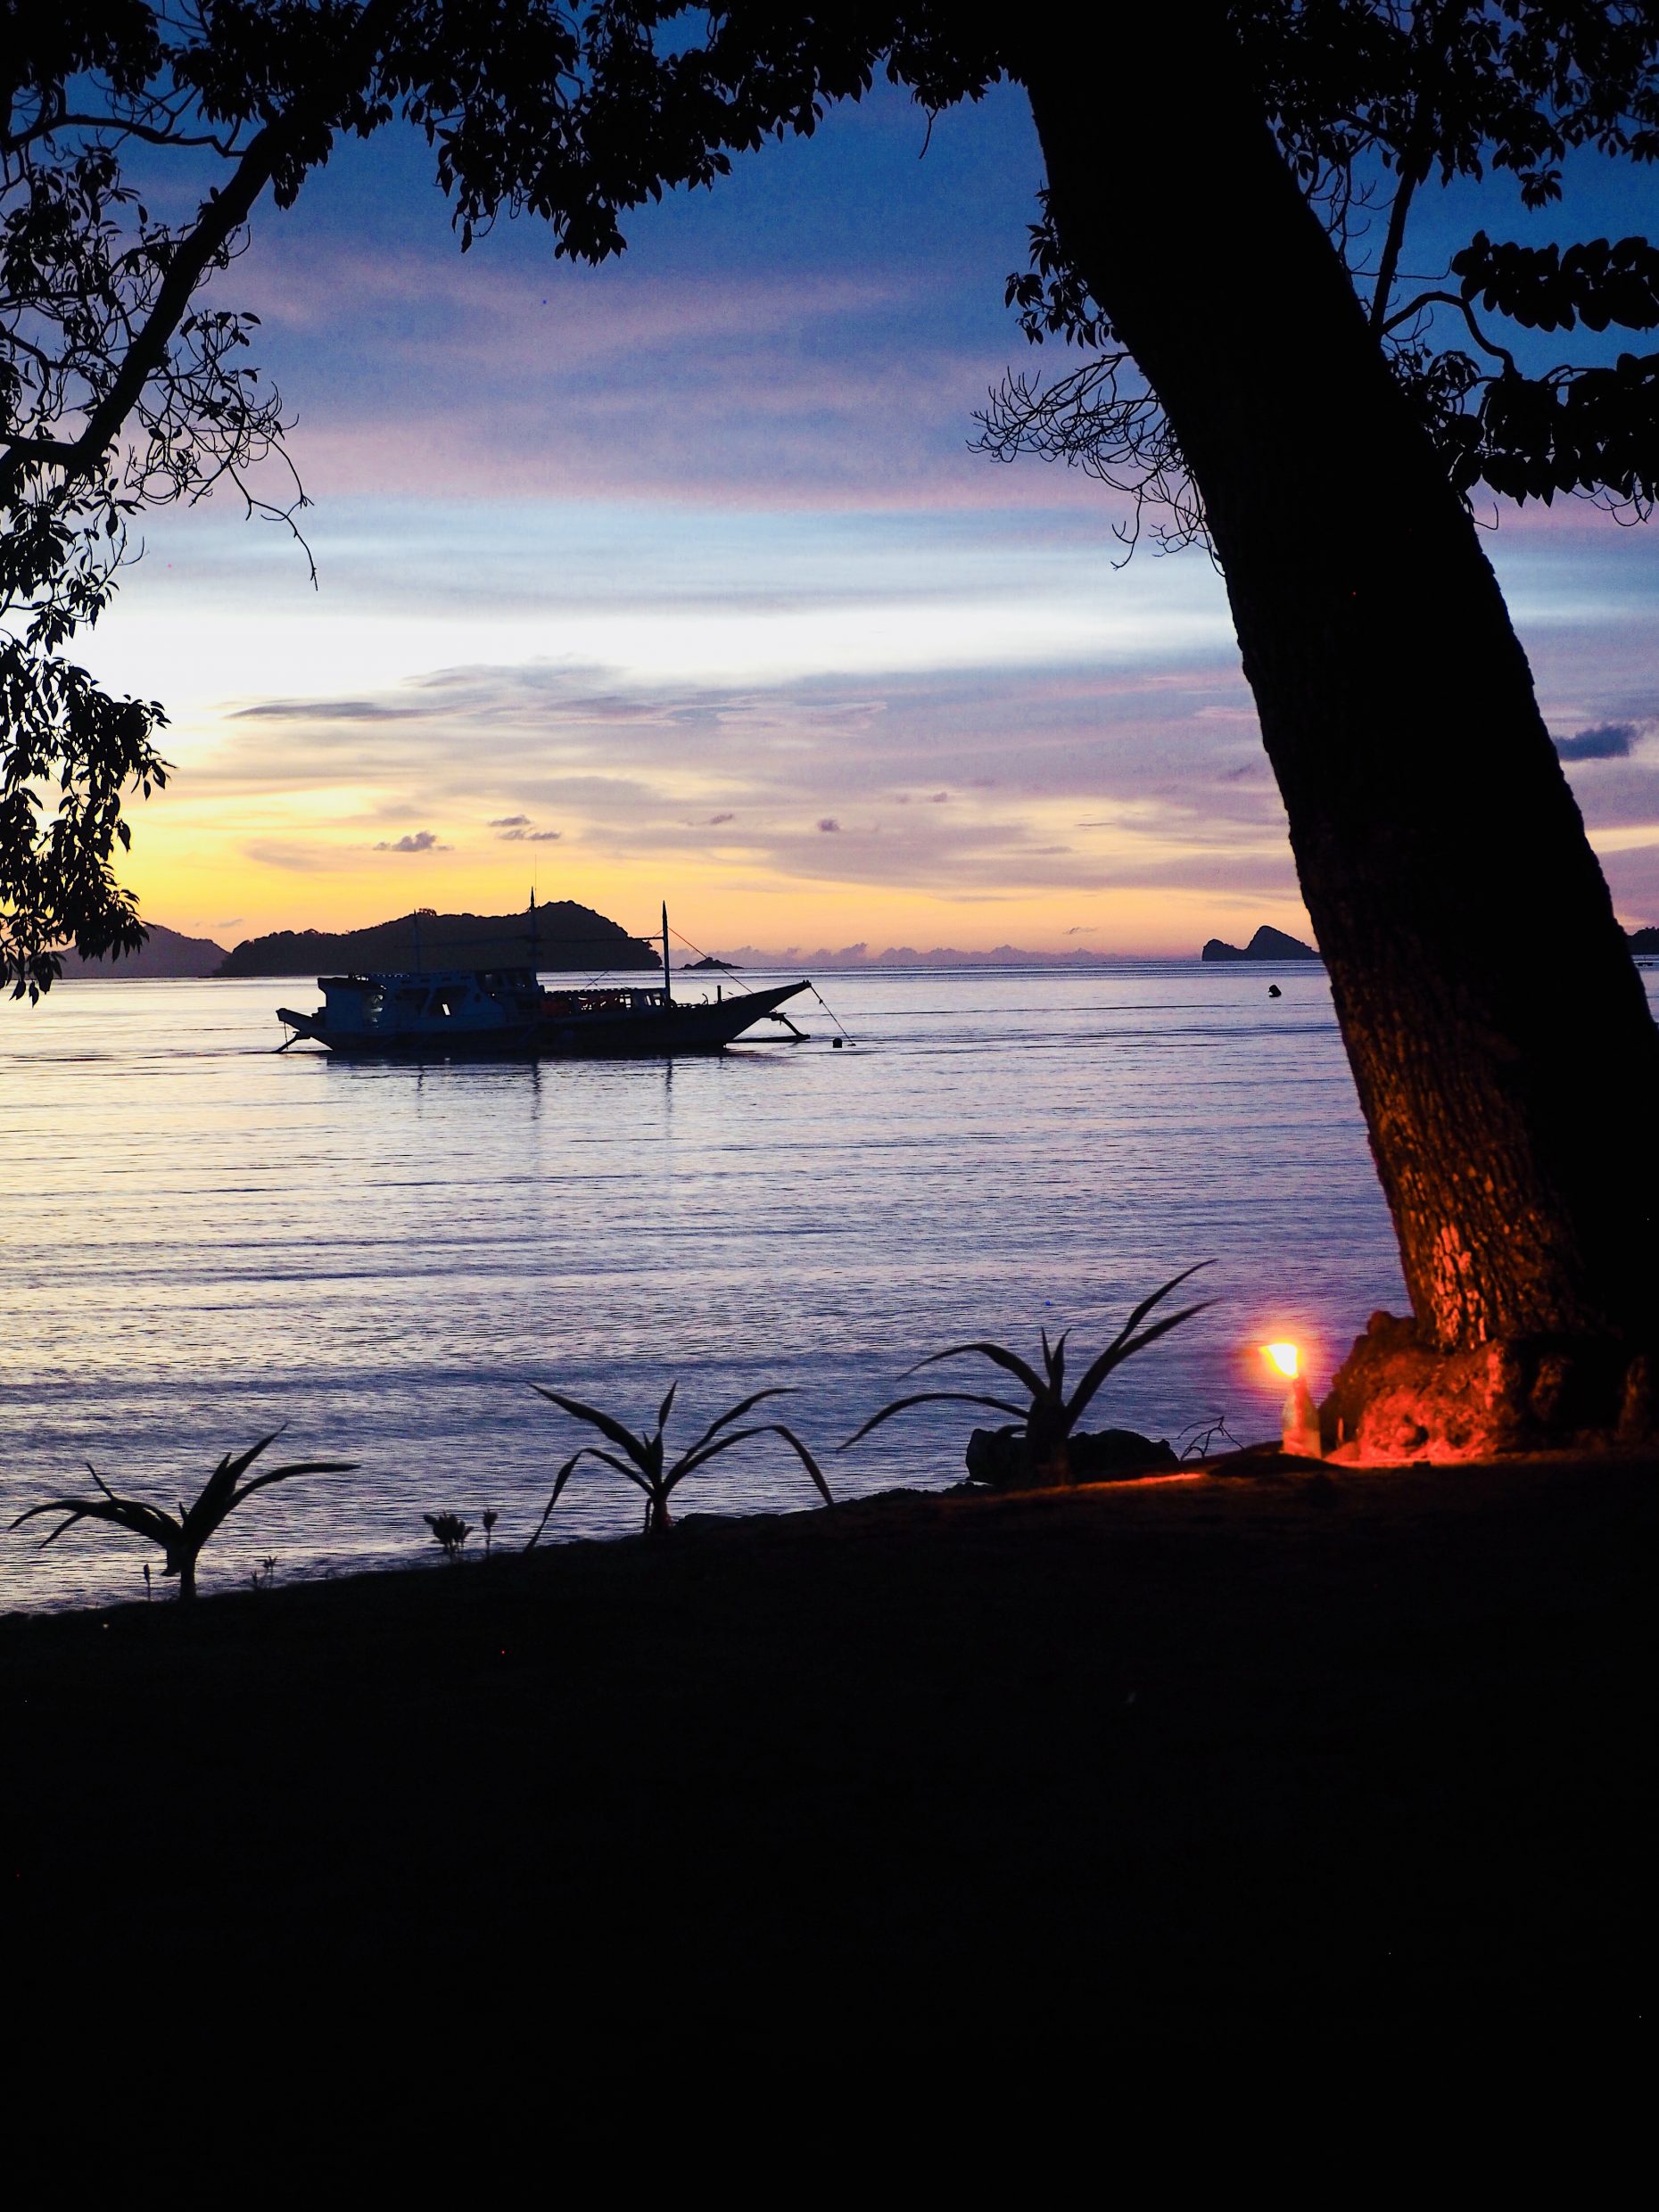 Buhay Isla sunset.jpg